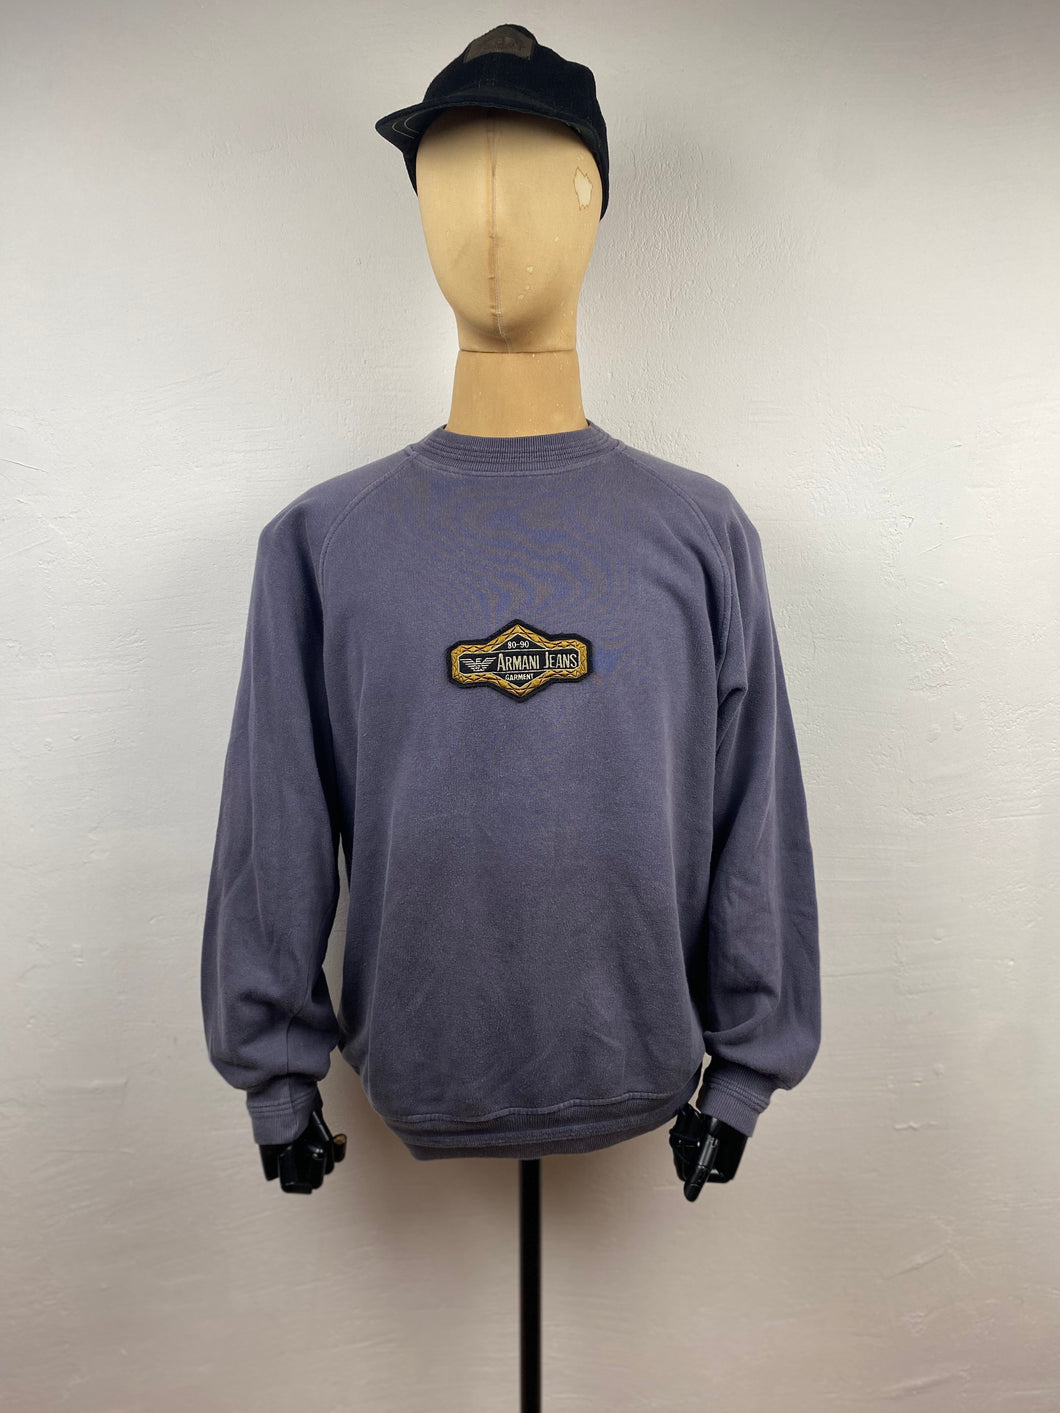 1989 Aj special edition sweater purple